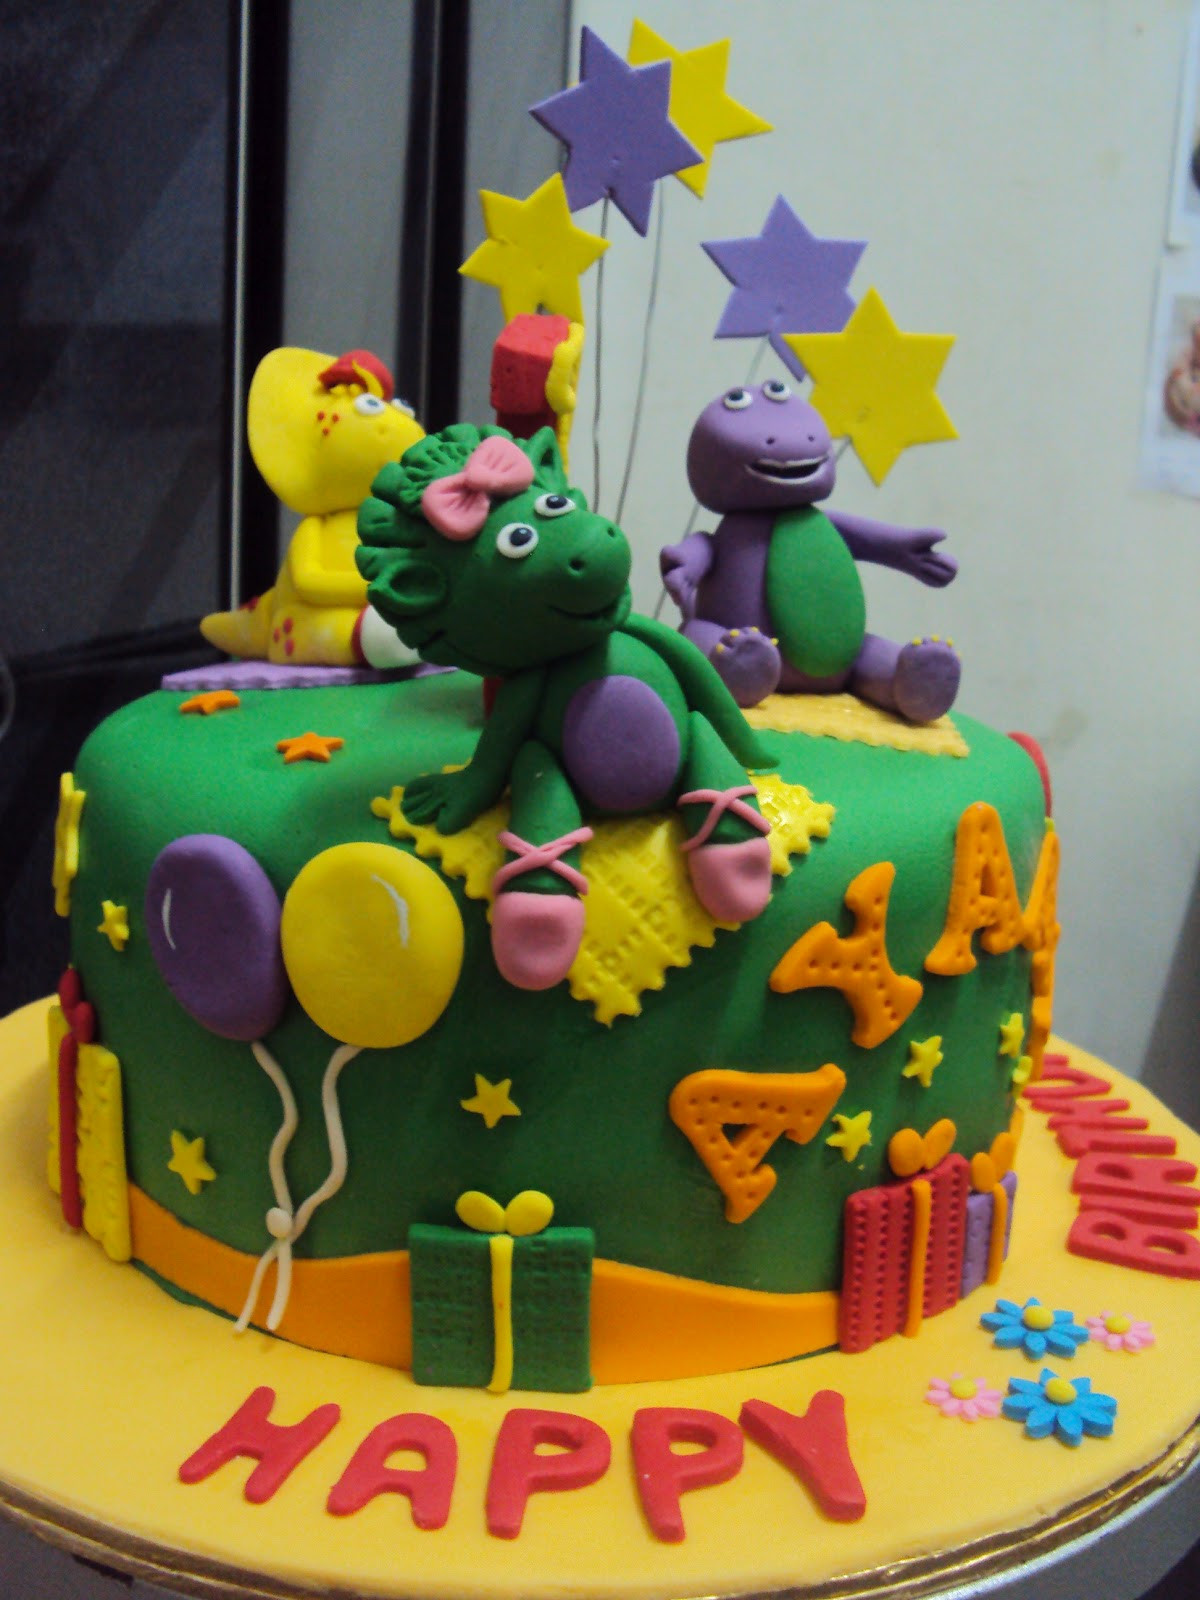 Barney Birthday Cake
 L mis Cakes & Cupcakes Ipoh Contact 012 Ayaan